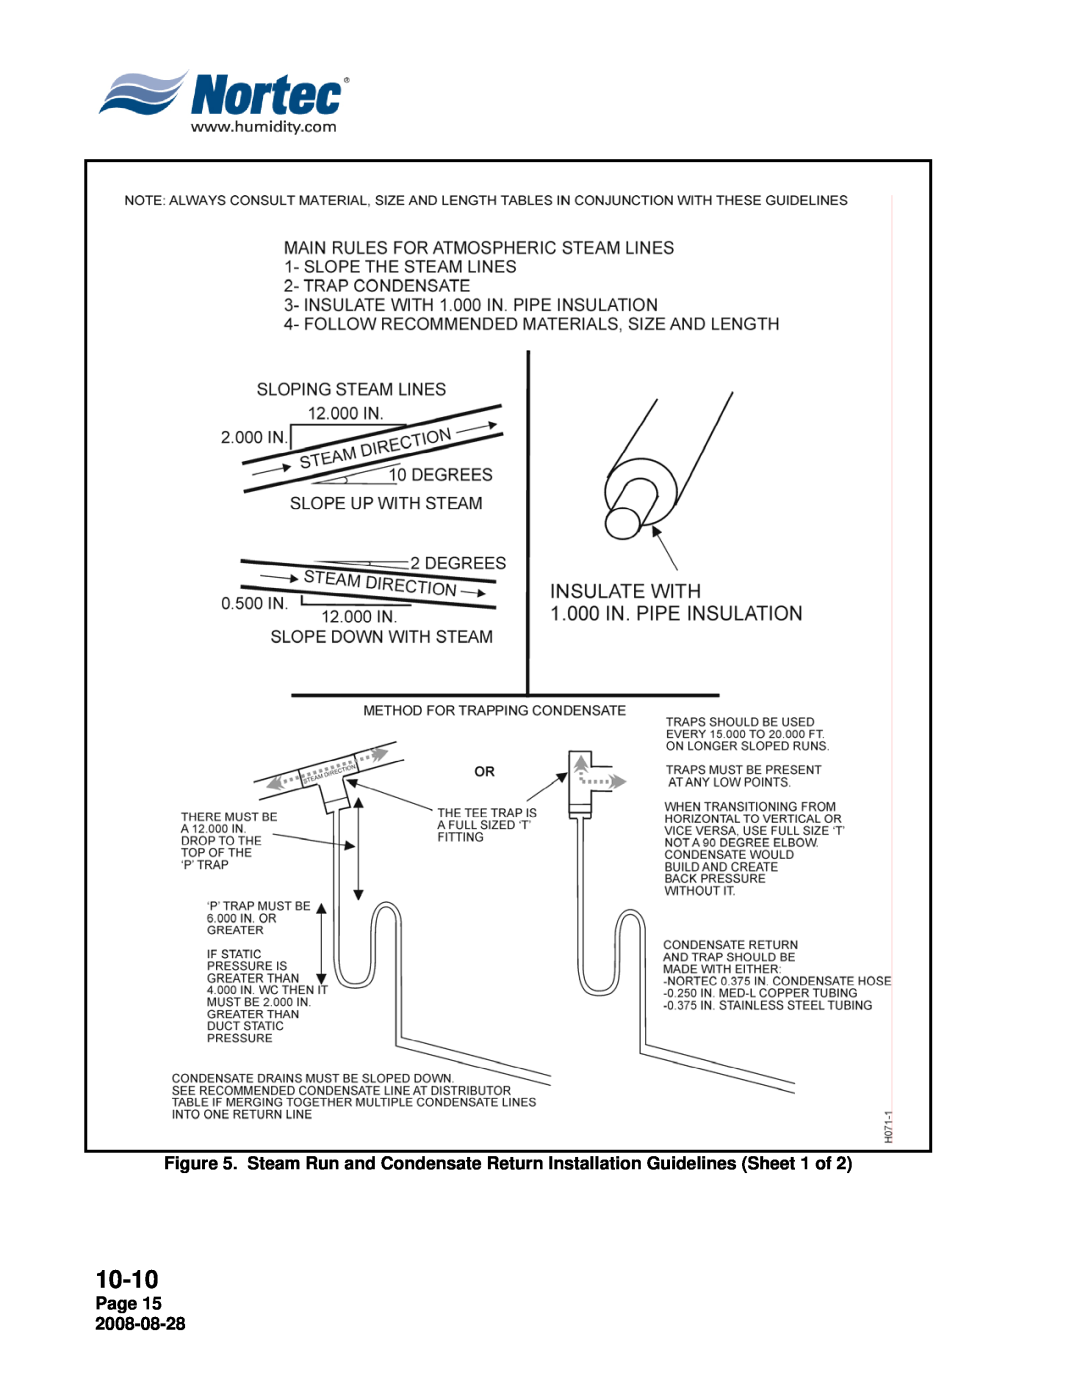 Nortec NH Series installation manual 10-10, Page 15 